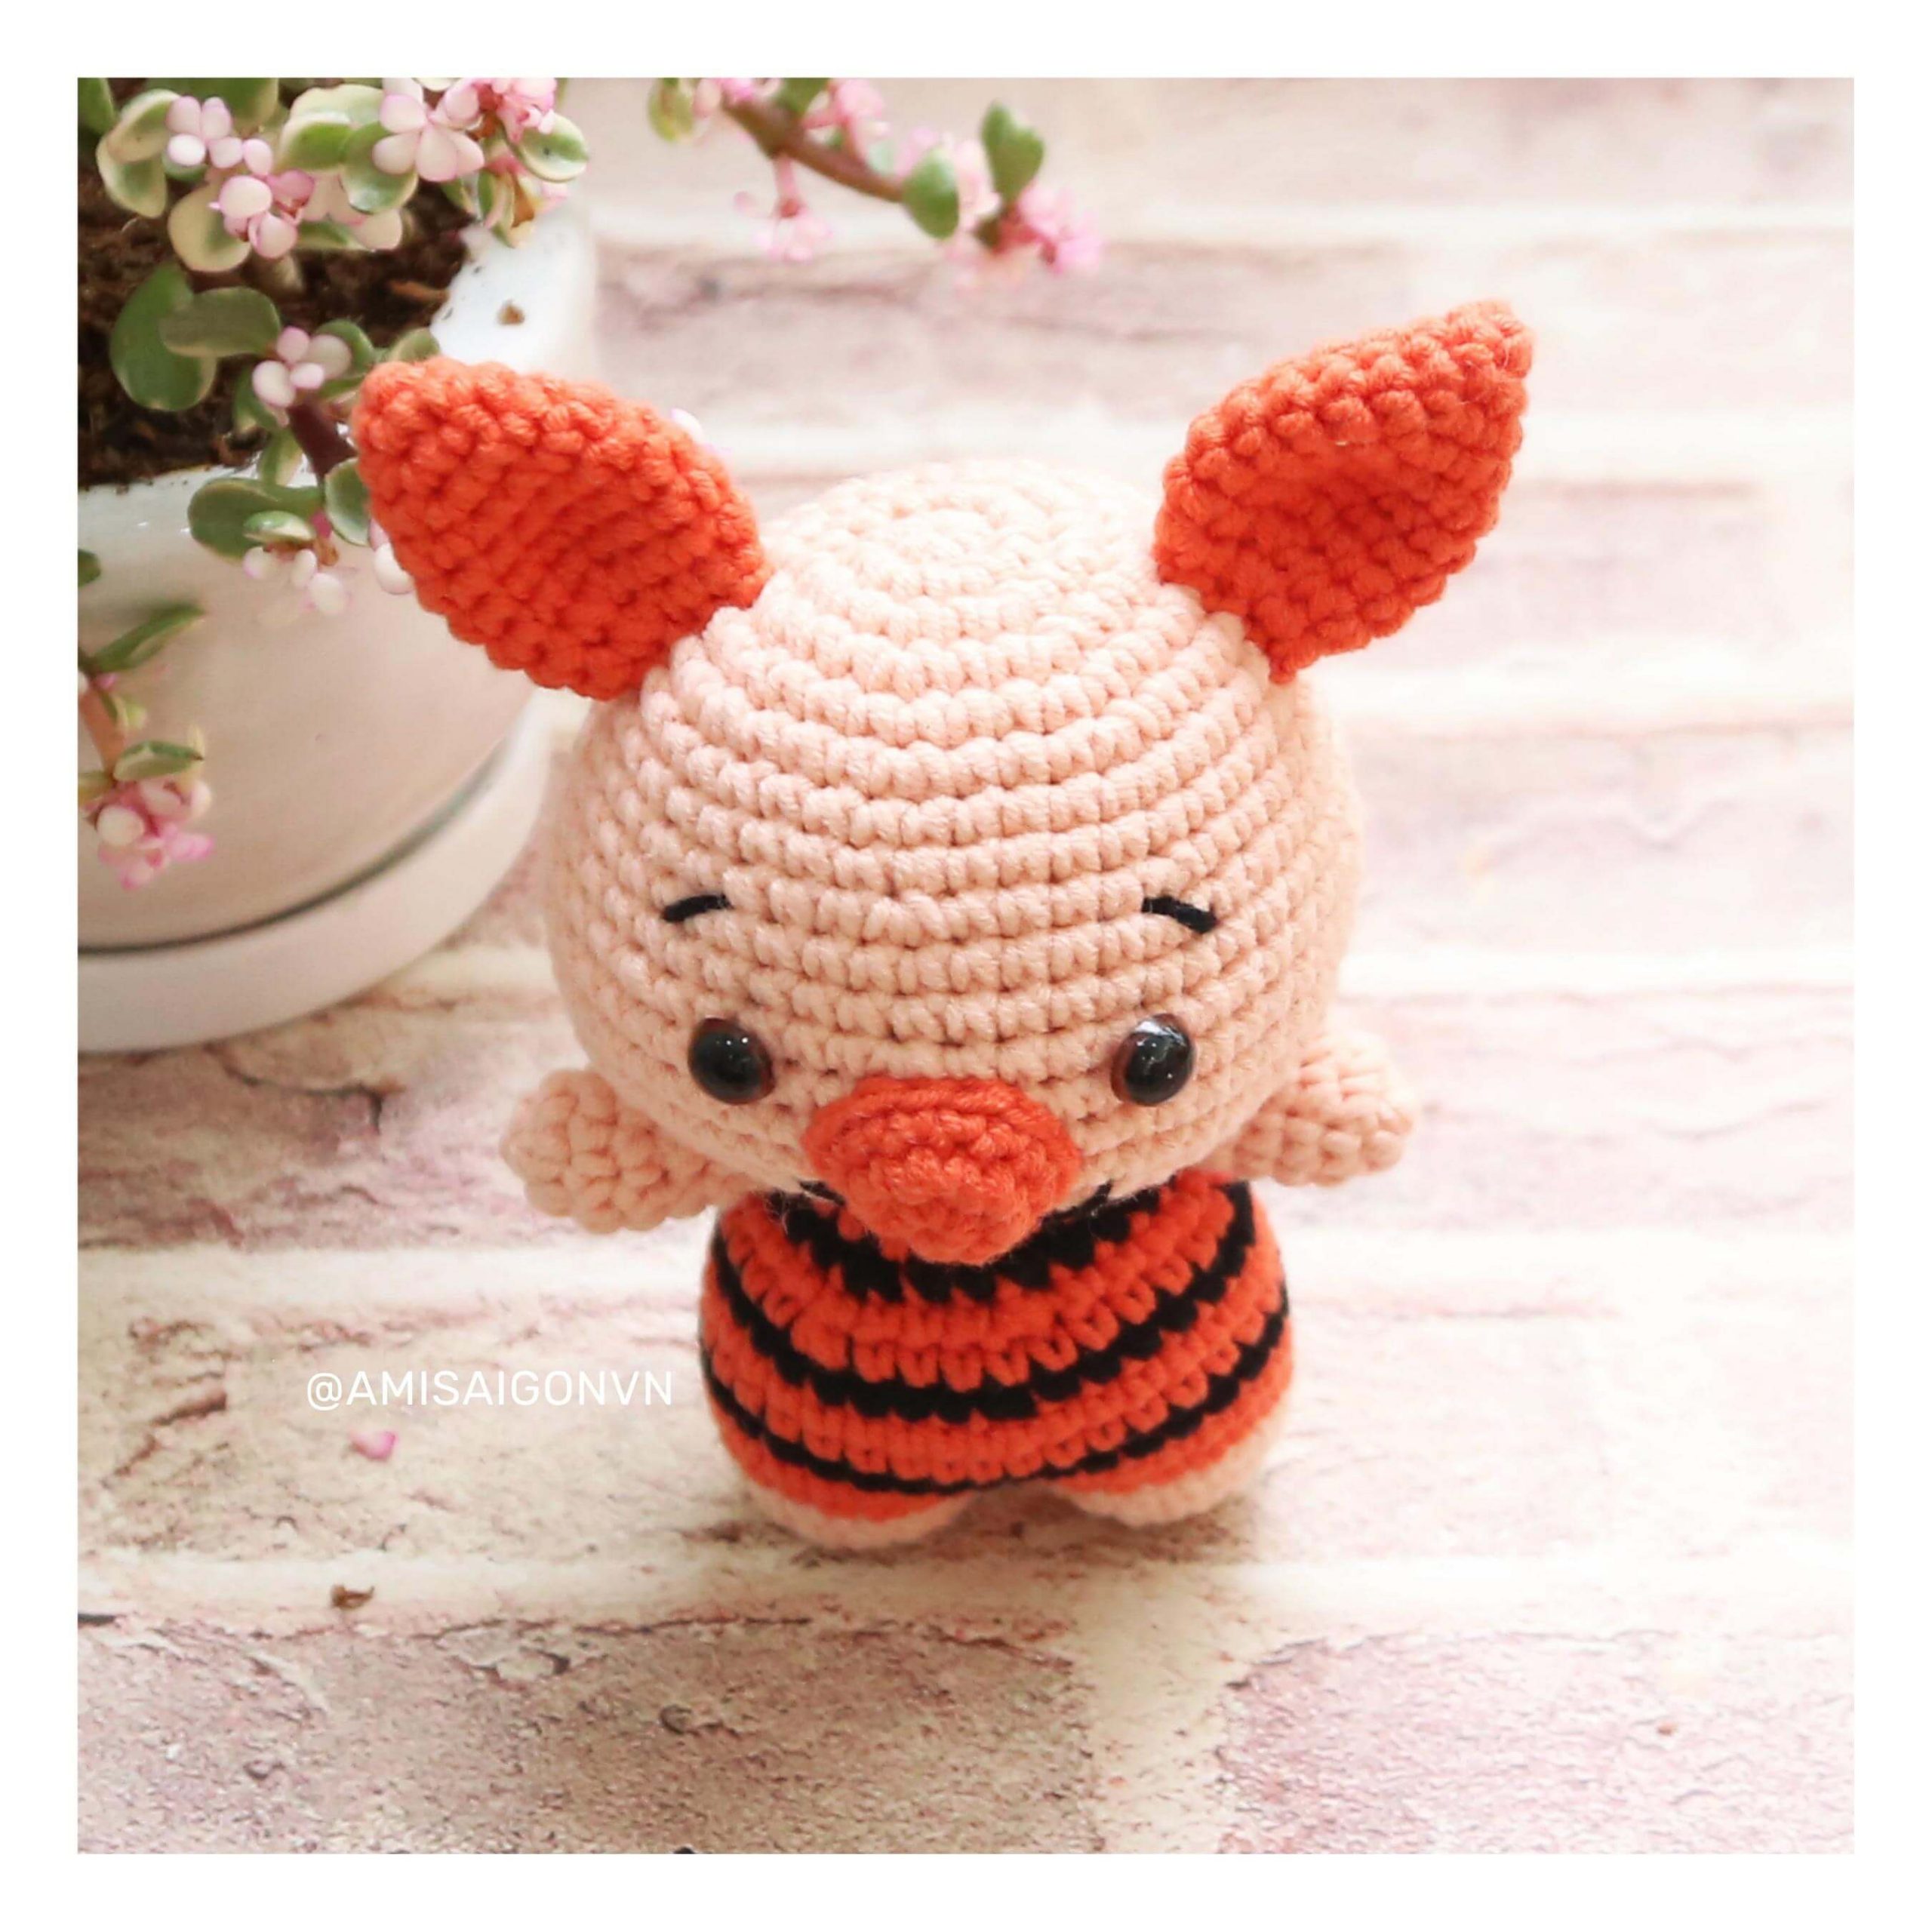 piglet-amigurumi-crochet-pattern-amisaigon (1)